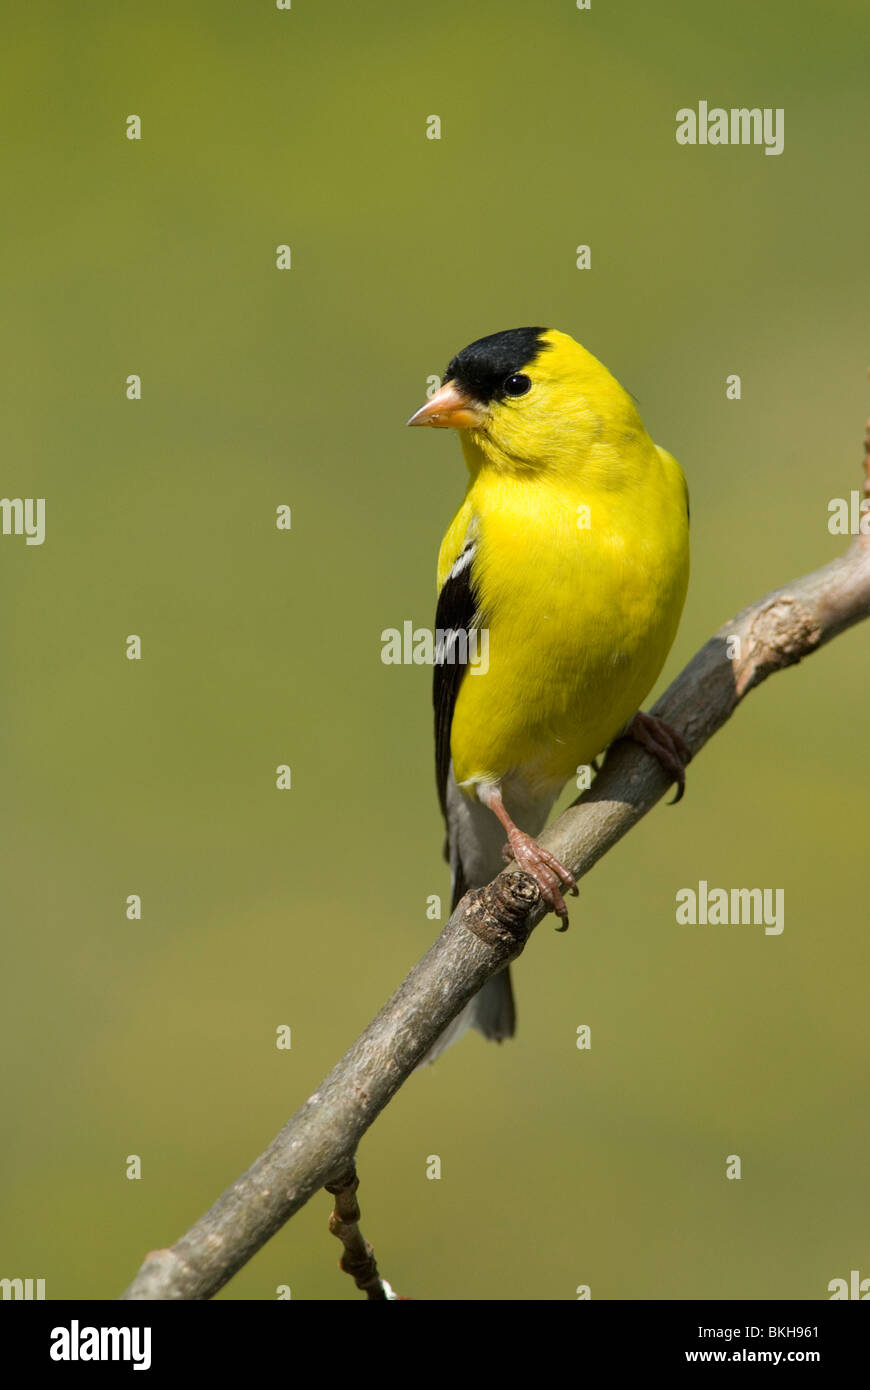 Een Treursijs zittend op een tak,A American Goldfinch sitting on a branch. Stock Photo